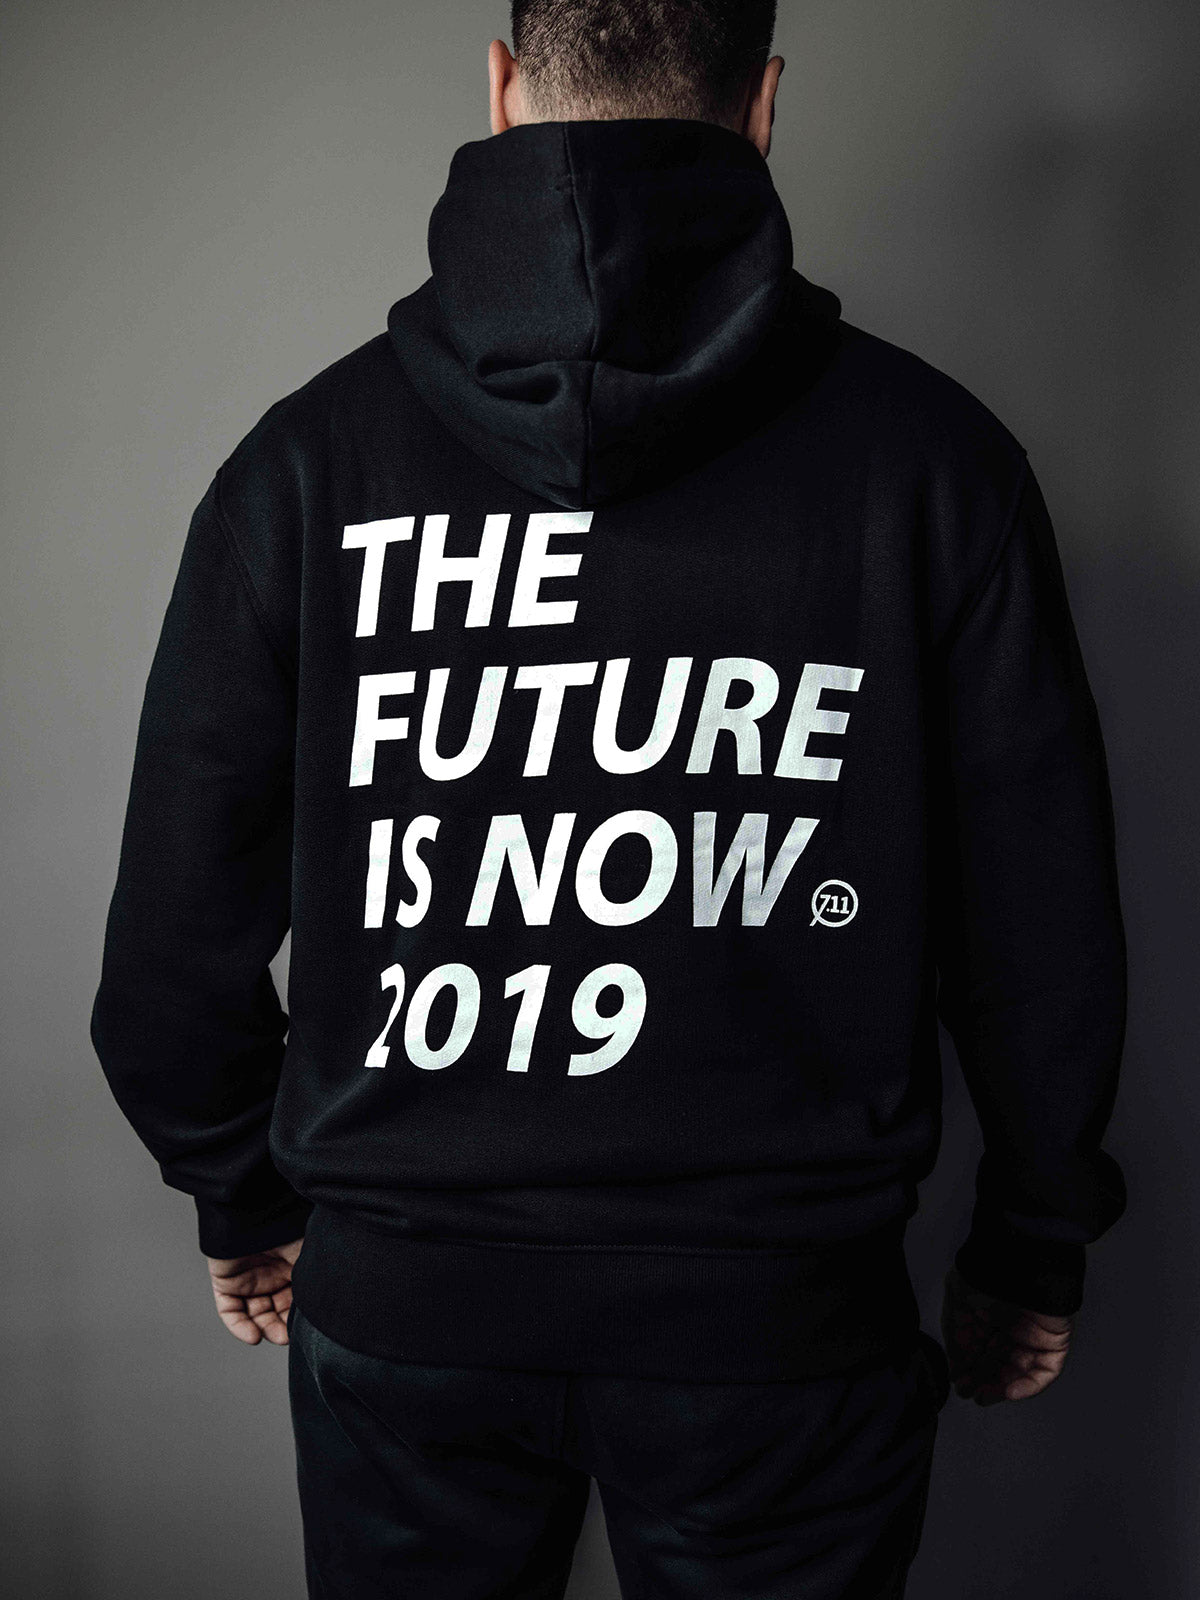 THE FUTURE IS NOW 2019 Hoodie Men